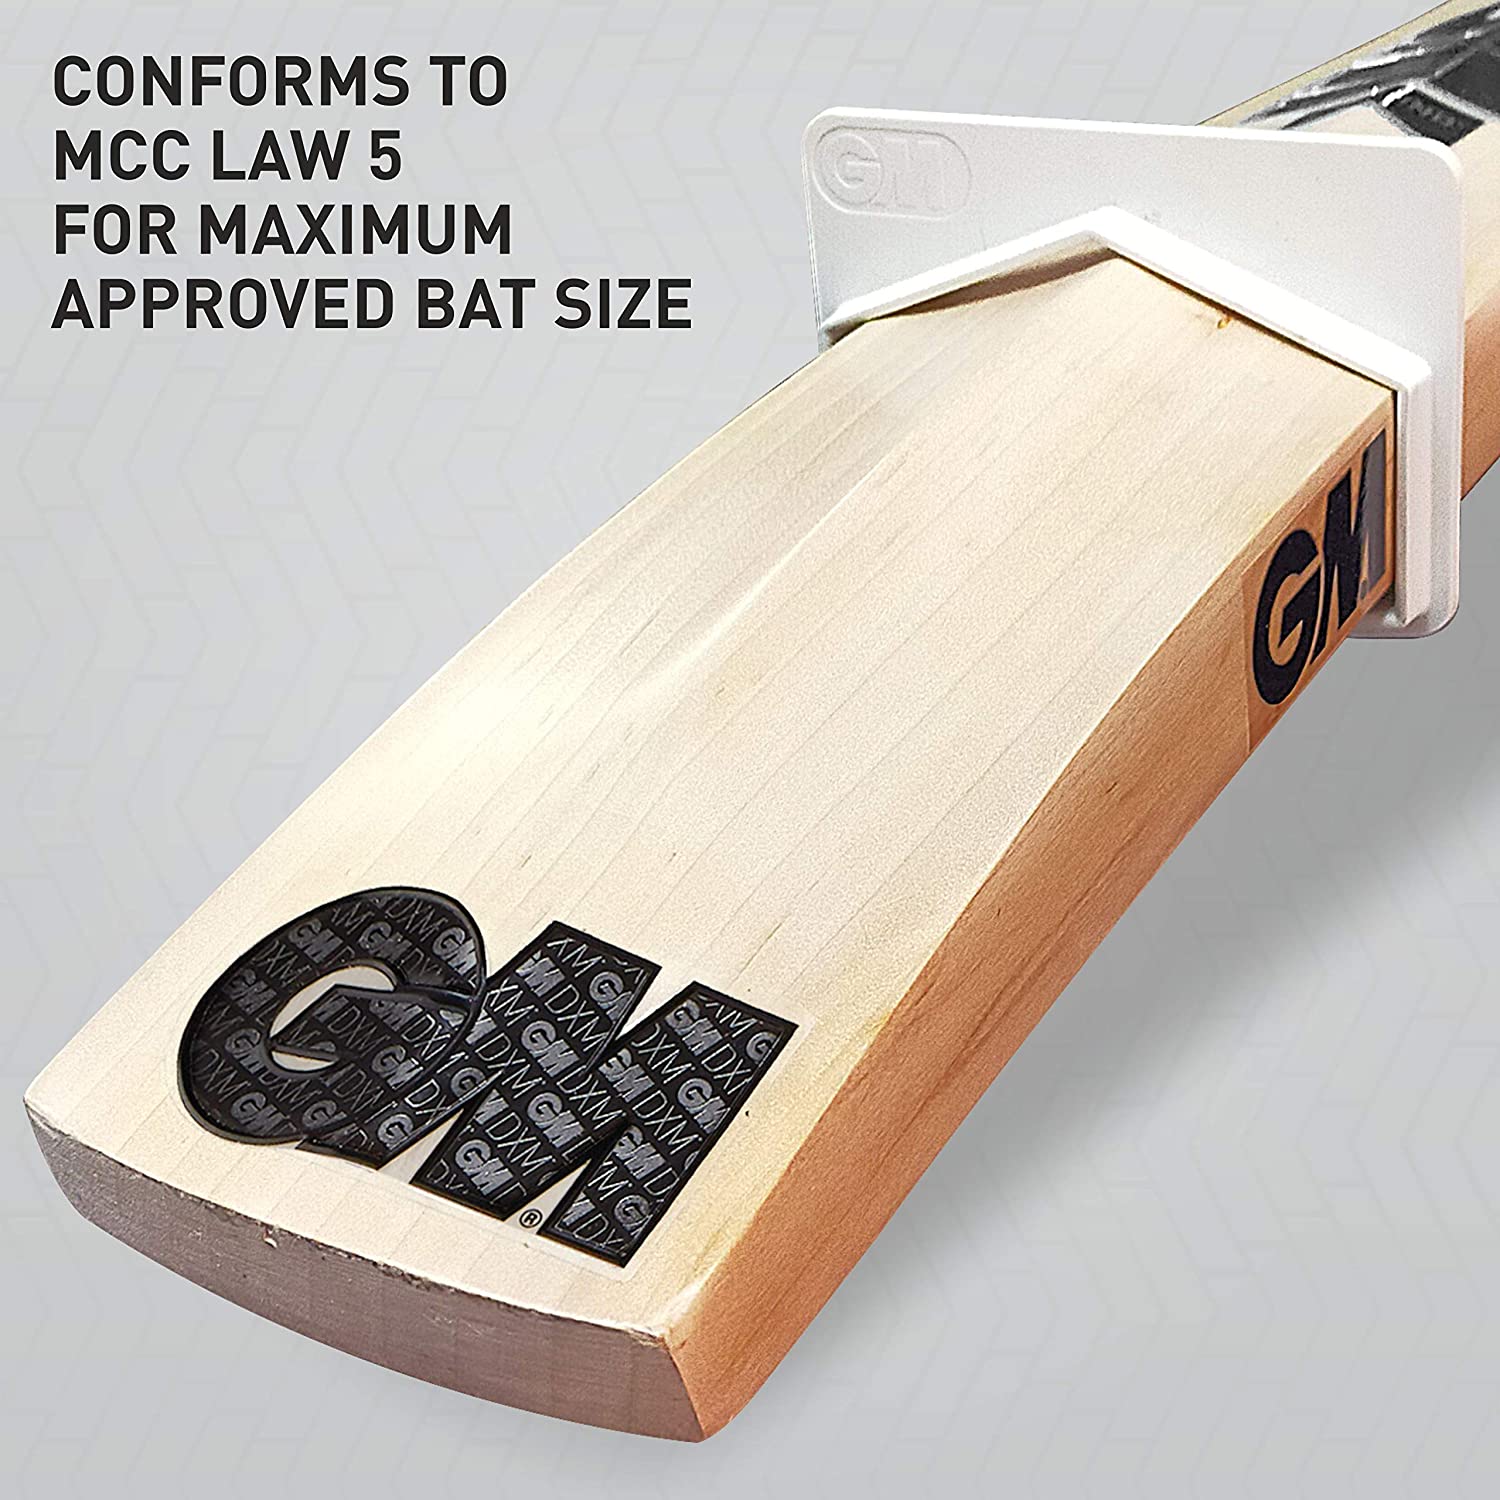 GM Noir 404 English Willow Cricket Bat - Best Price online Prokicksports.com